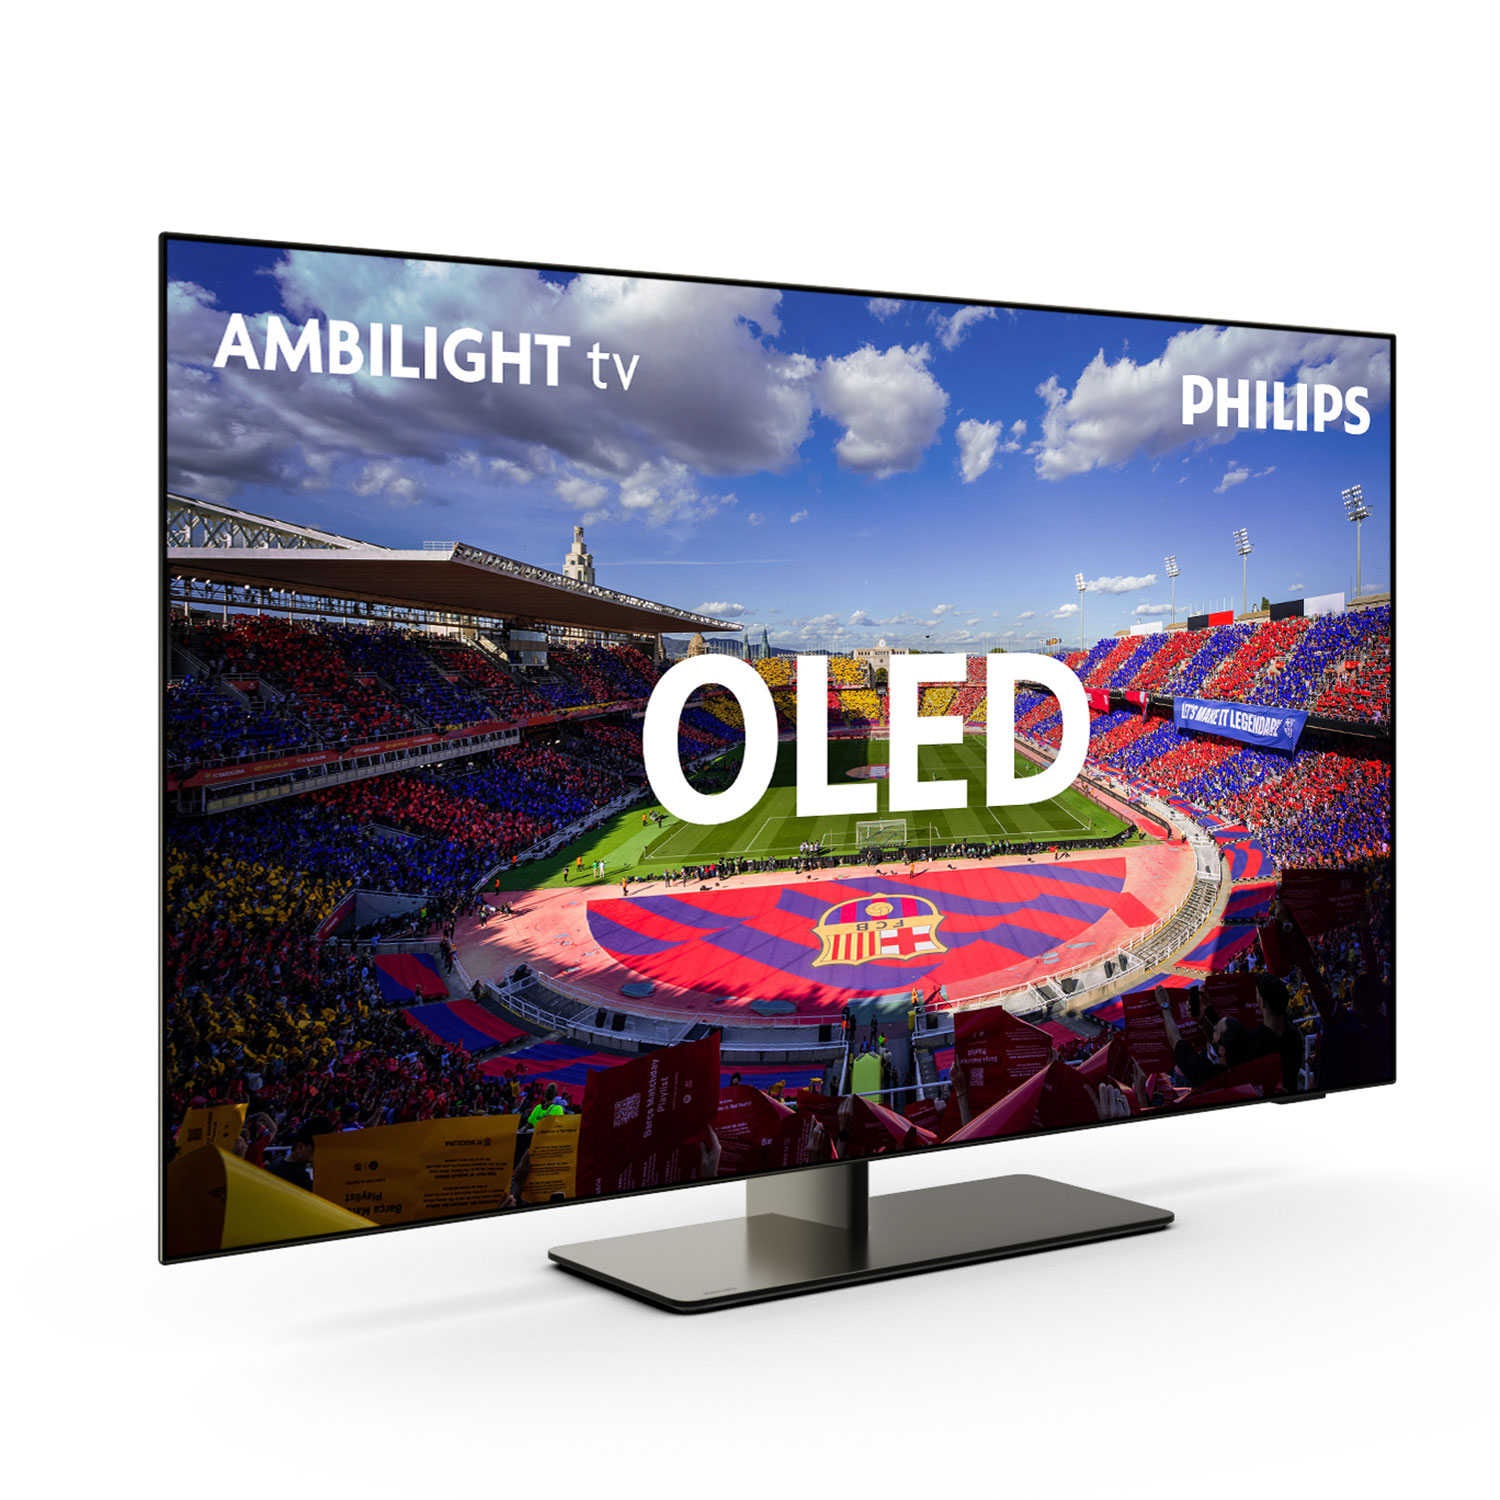 Philips Ambilight TV OLED808 42" OLED-TV